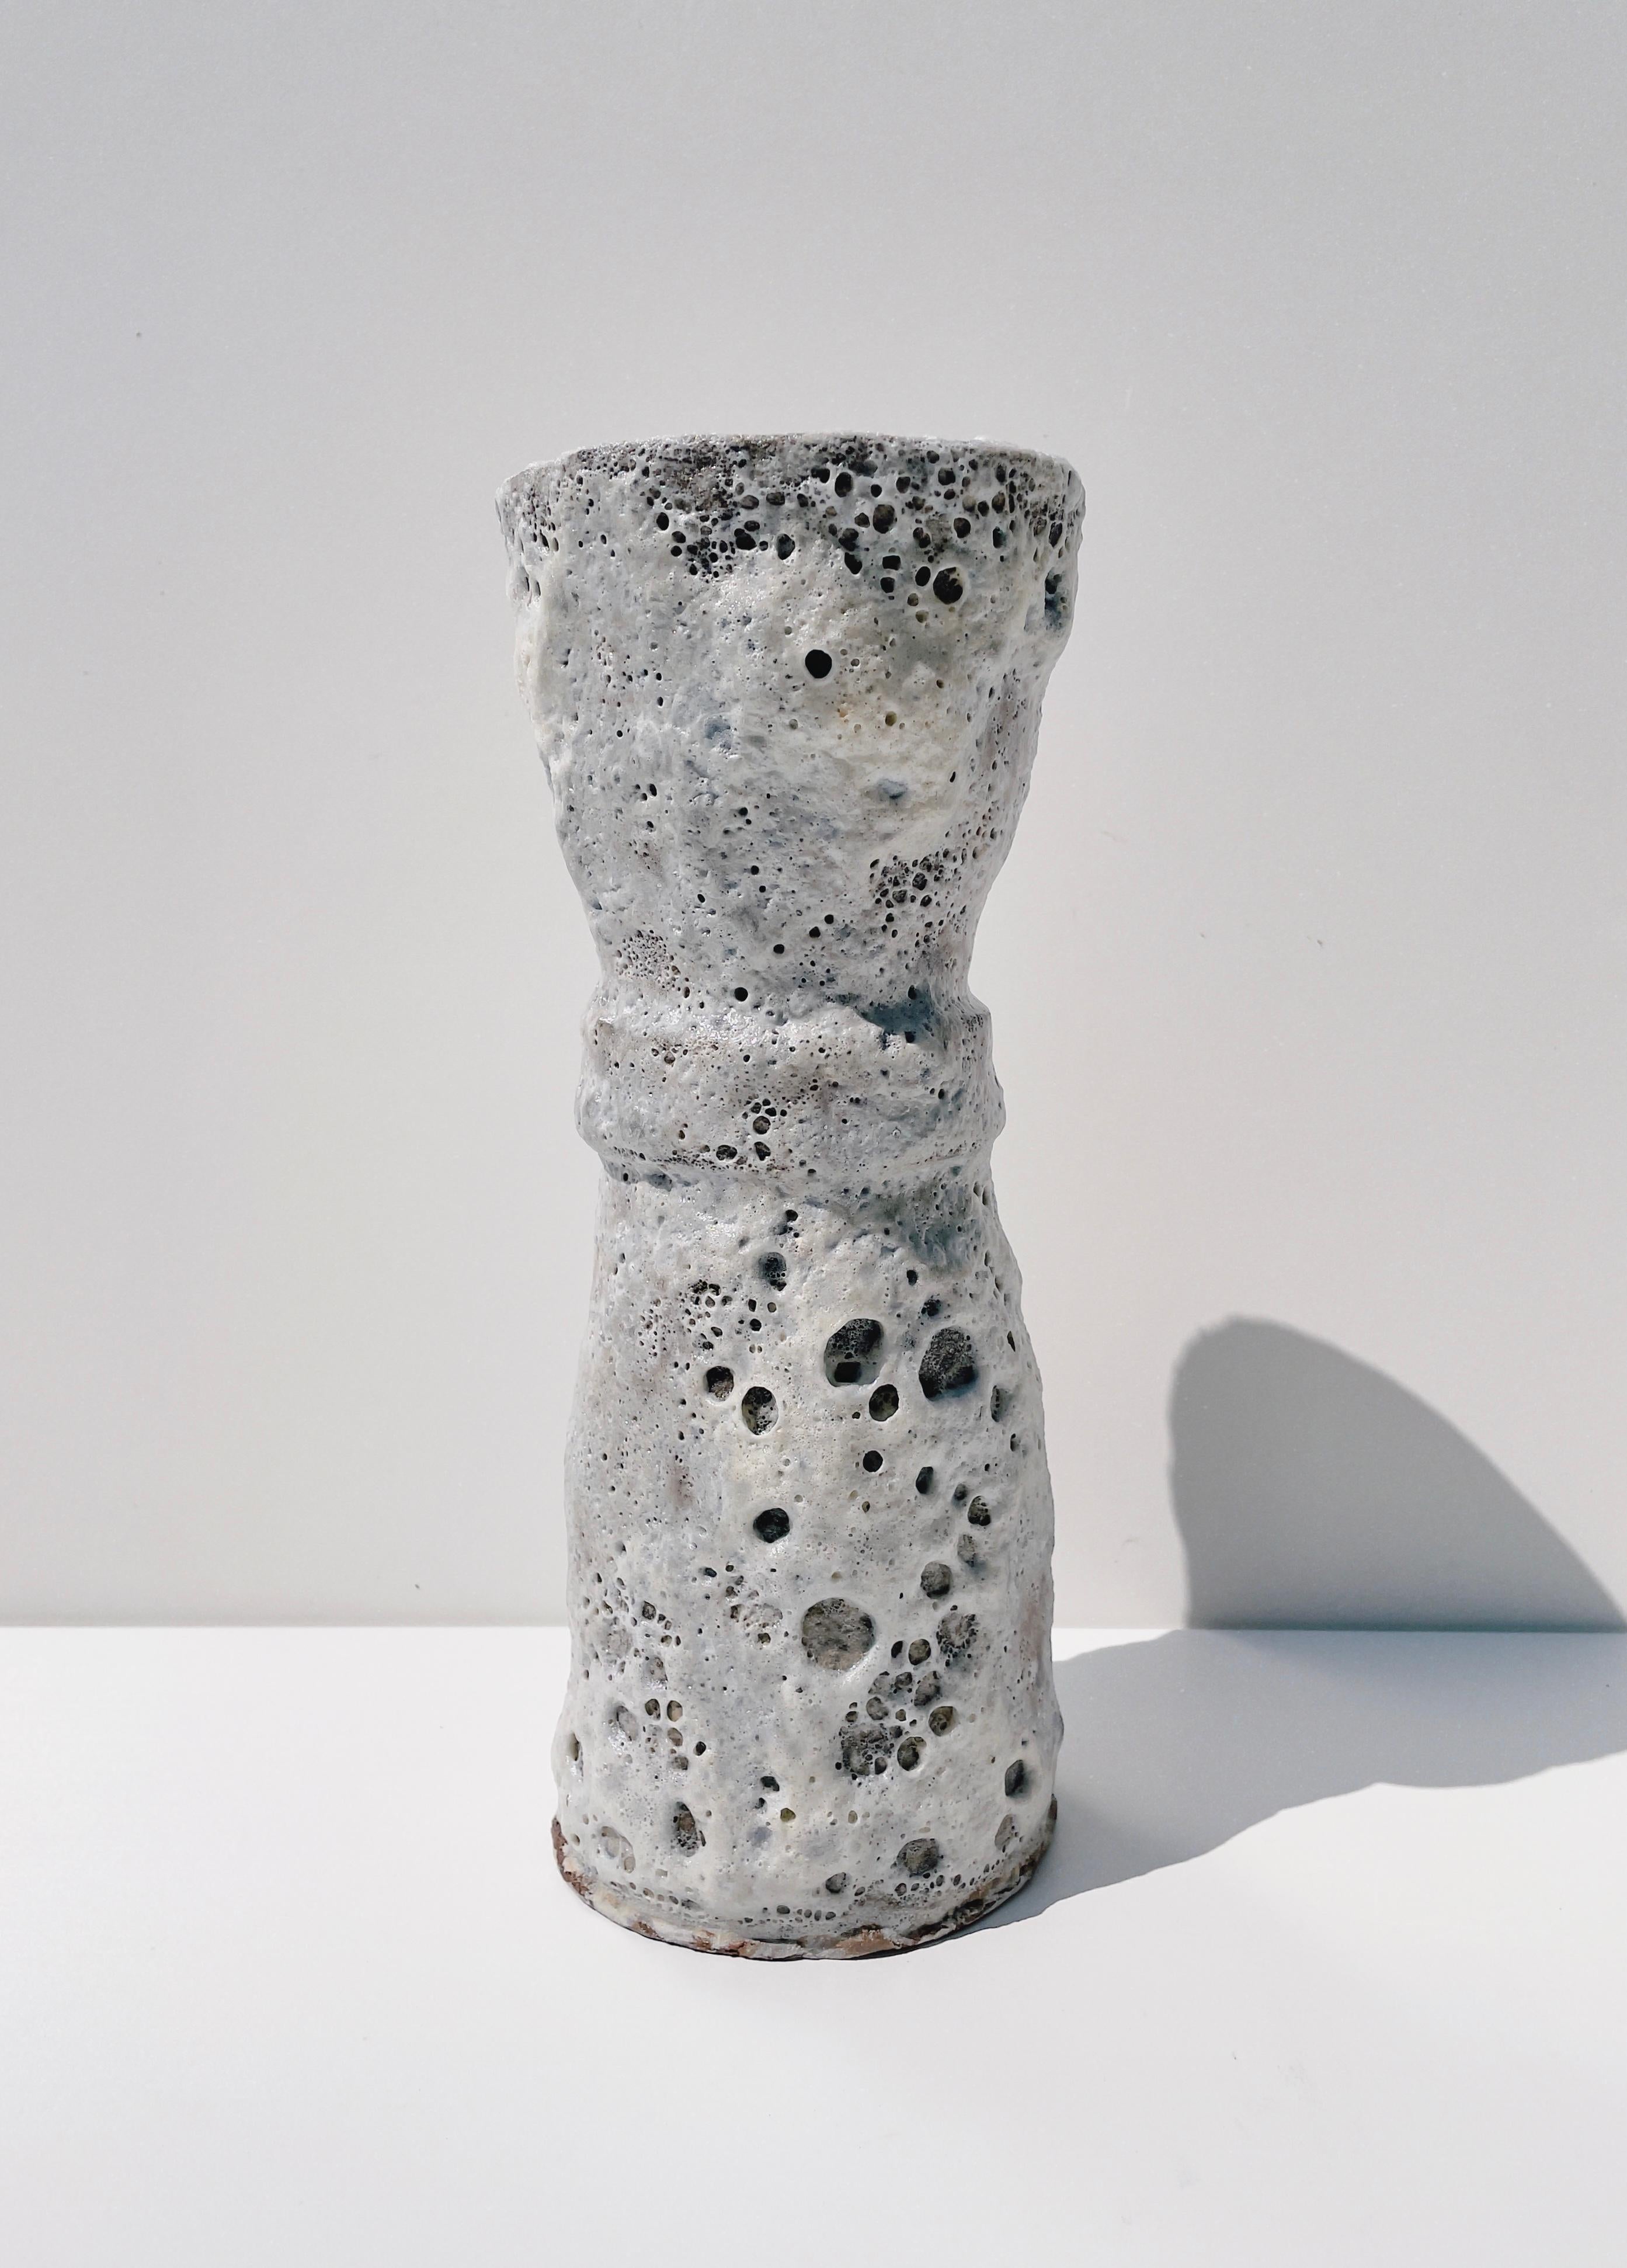 French Unique Stoneware Glaze Sculpture by Lisa Geue